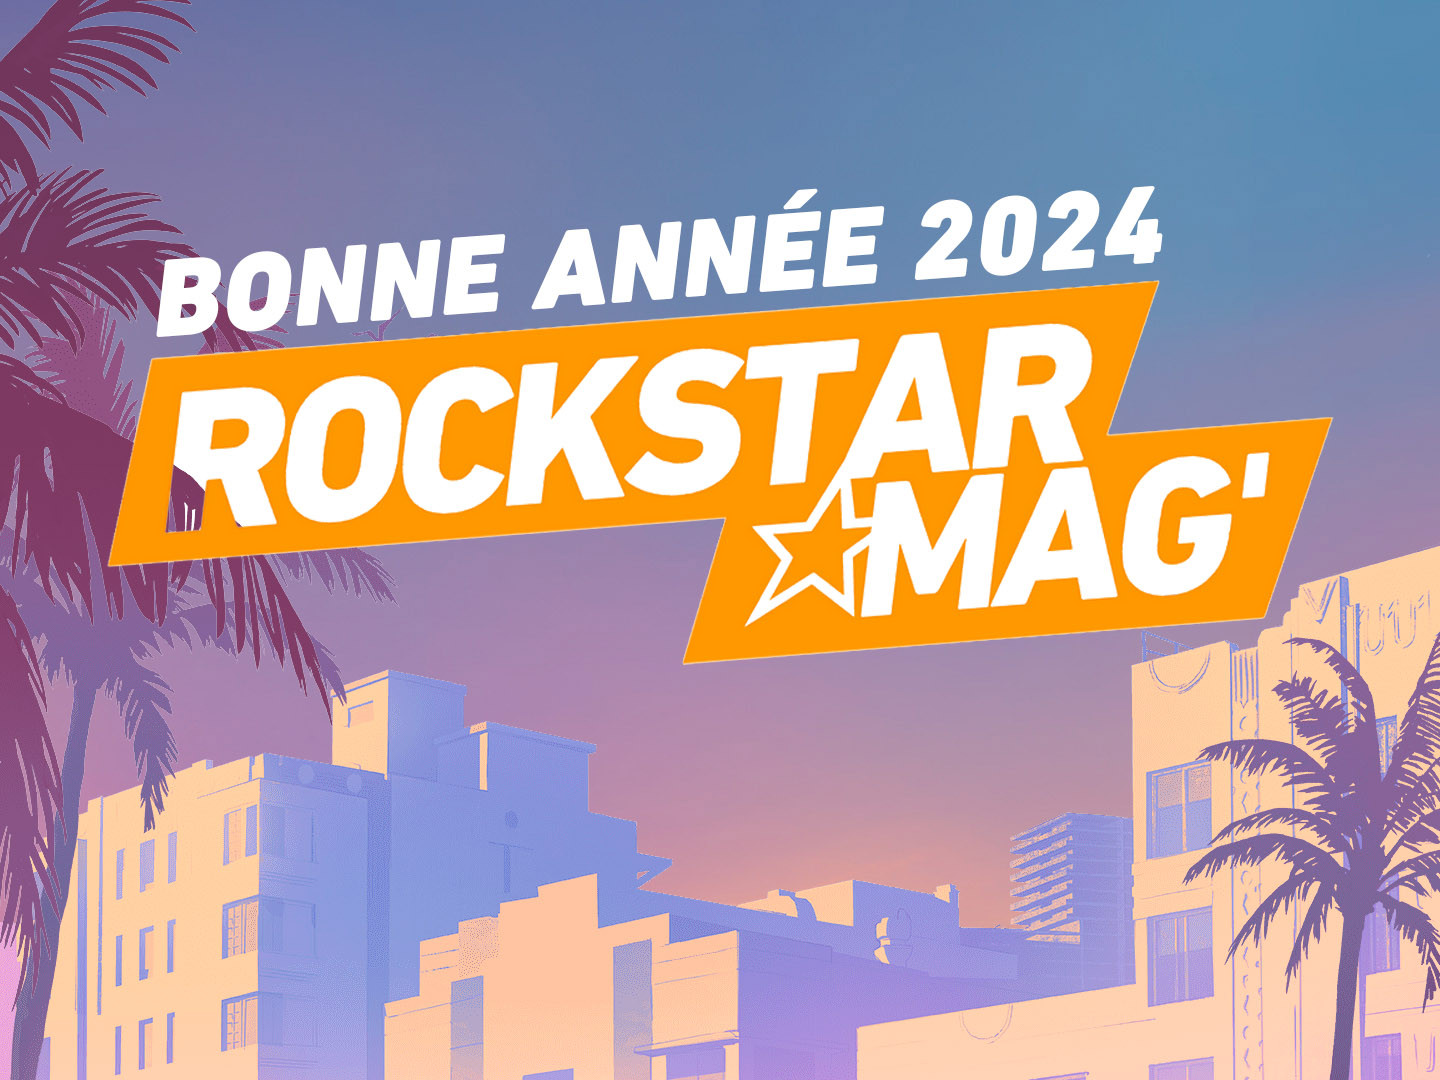 Bonne Année 2024 Rockstar Mag